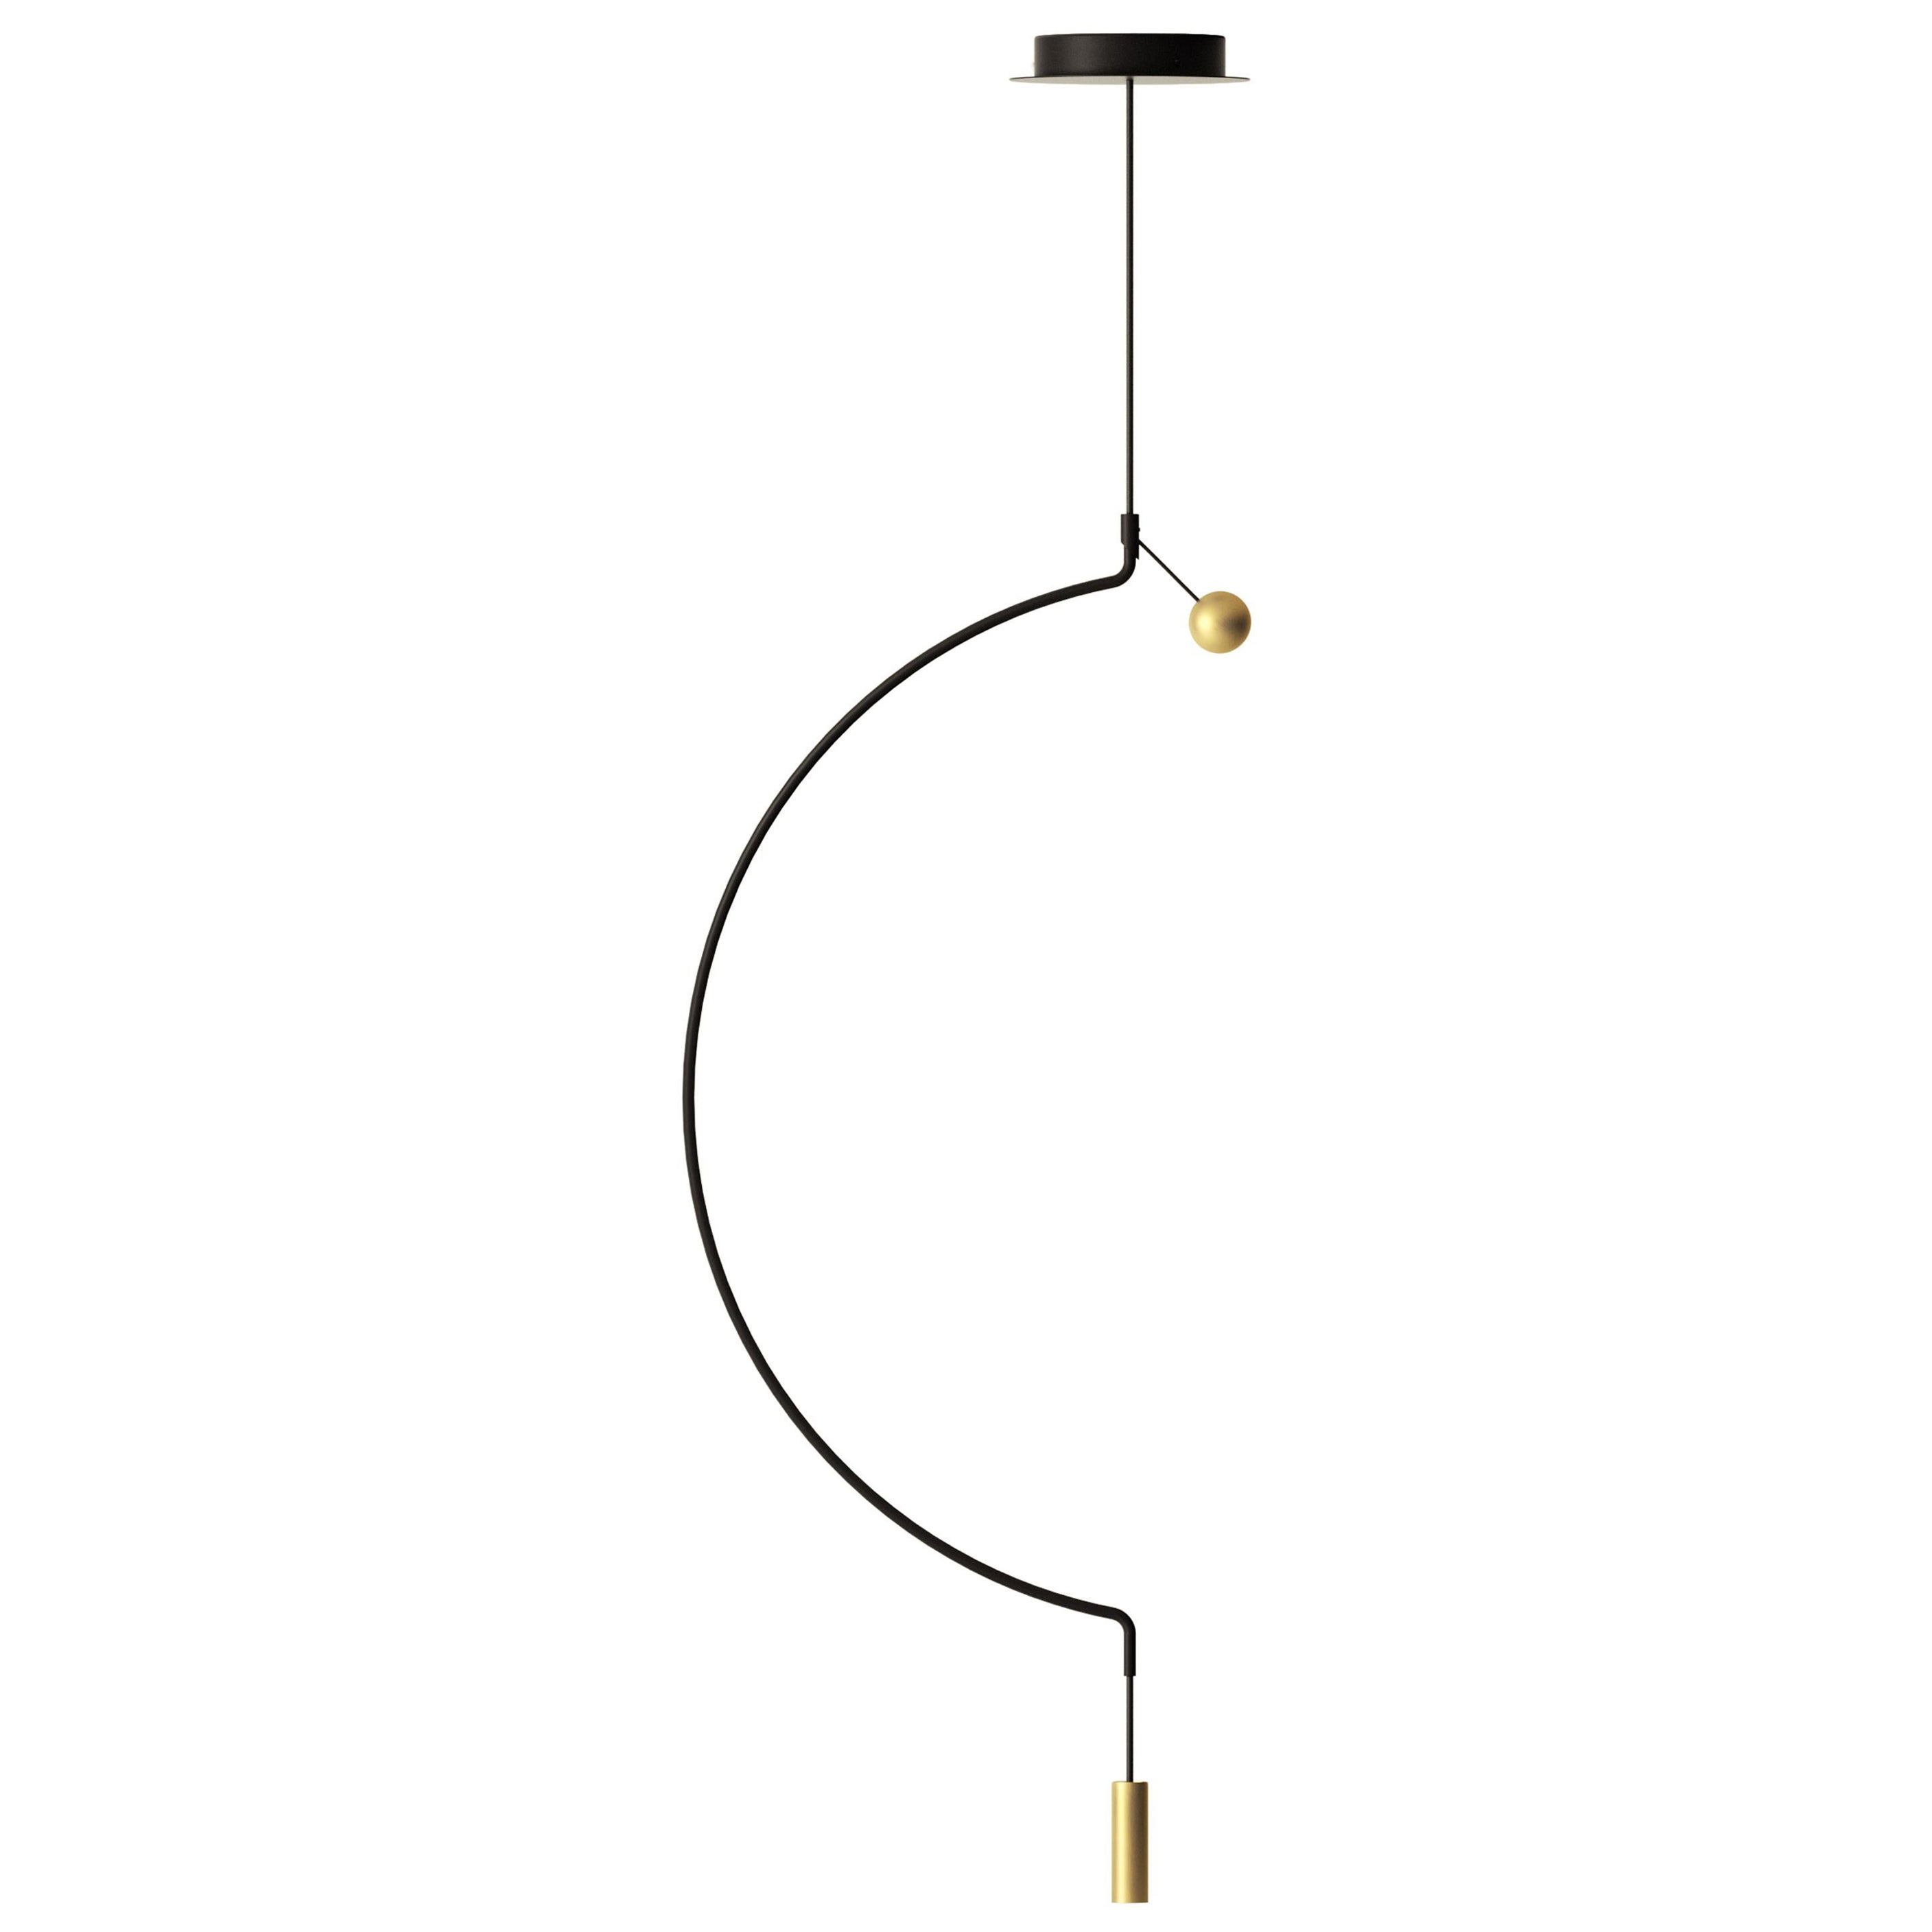 Axolight Liaison Model G1 Pendant Lamp in Black/Gold by Sara Moroni